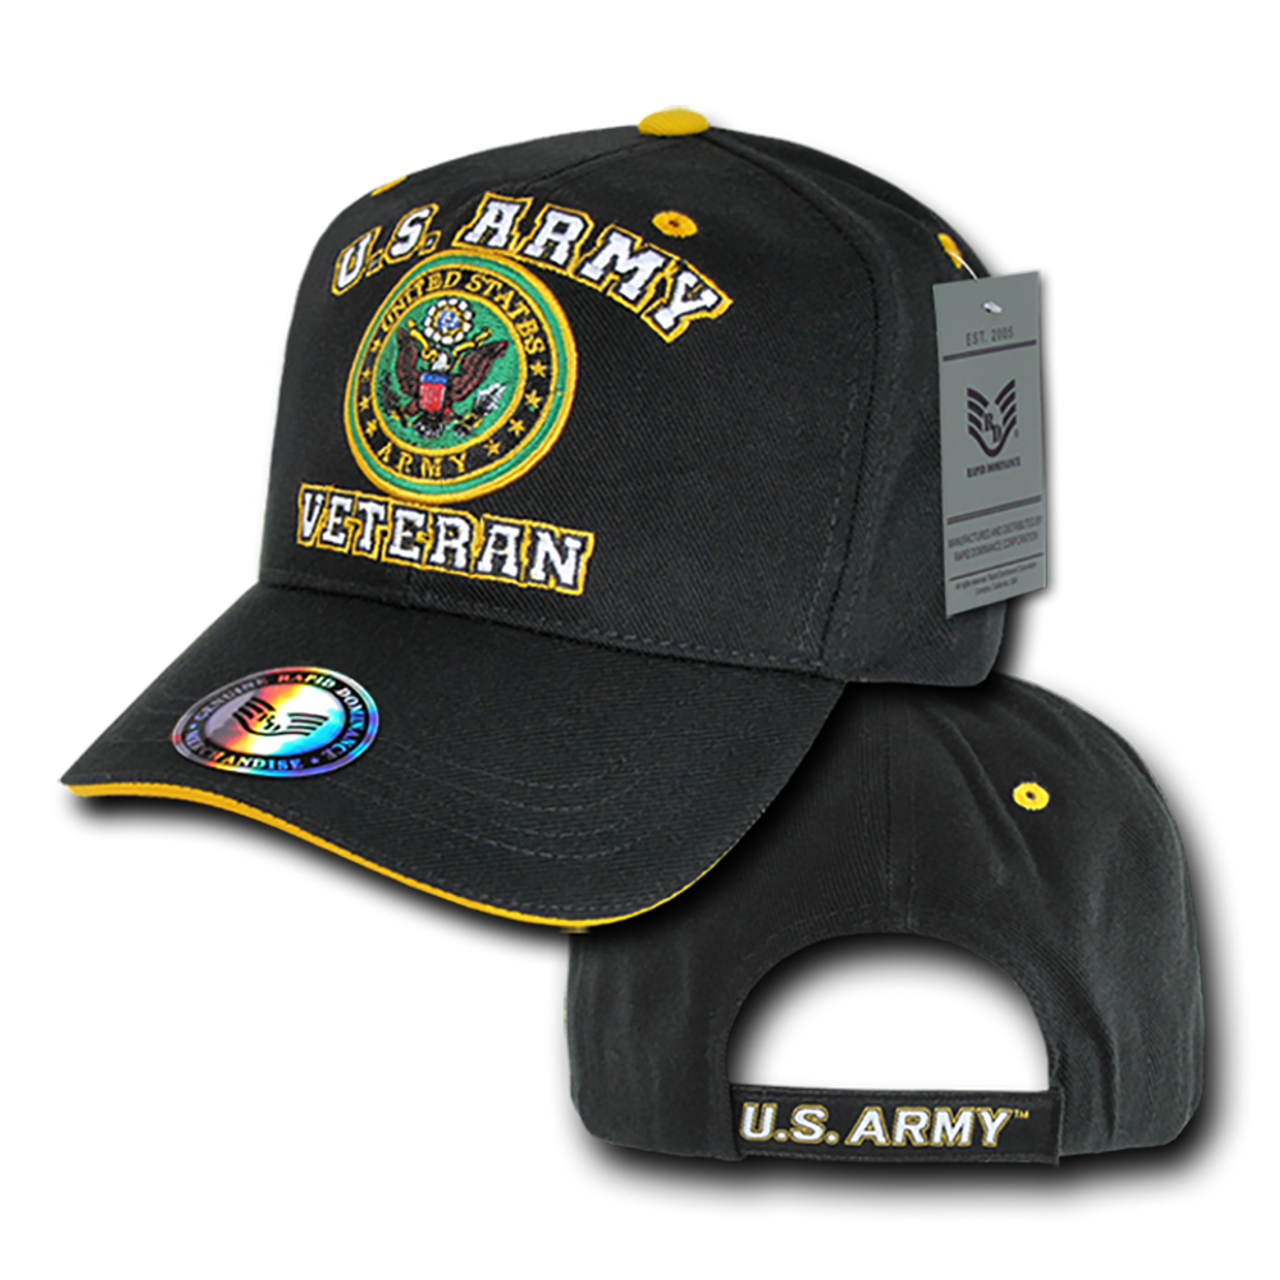 VET - Veteran Cap - U.S. Army - Black